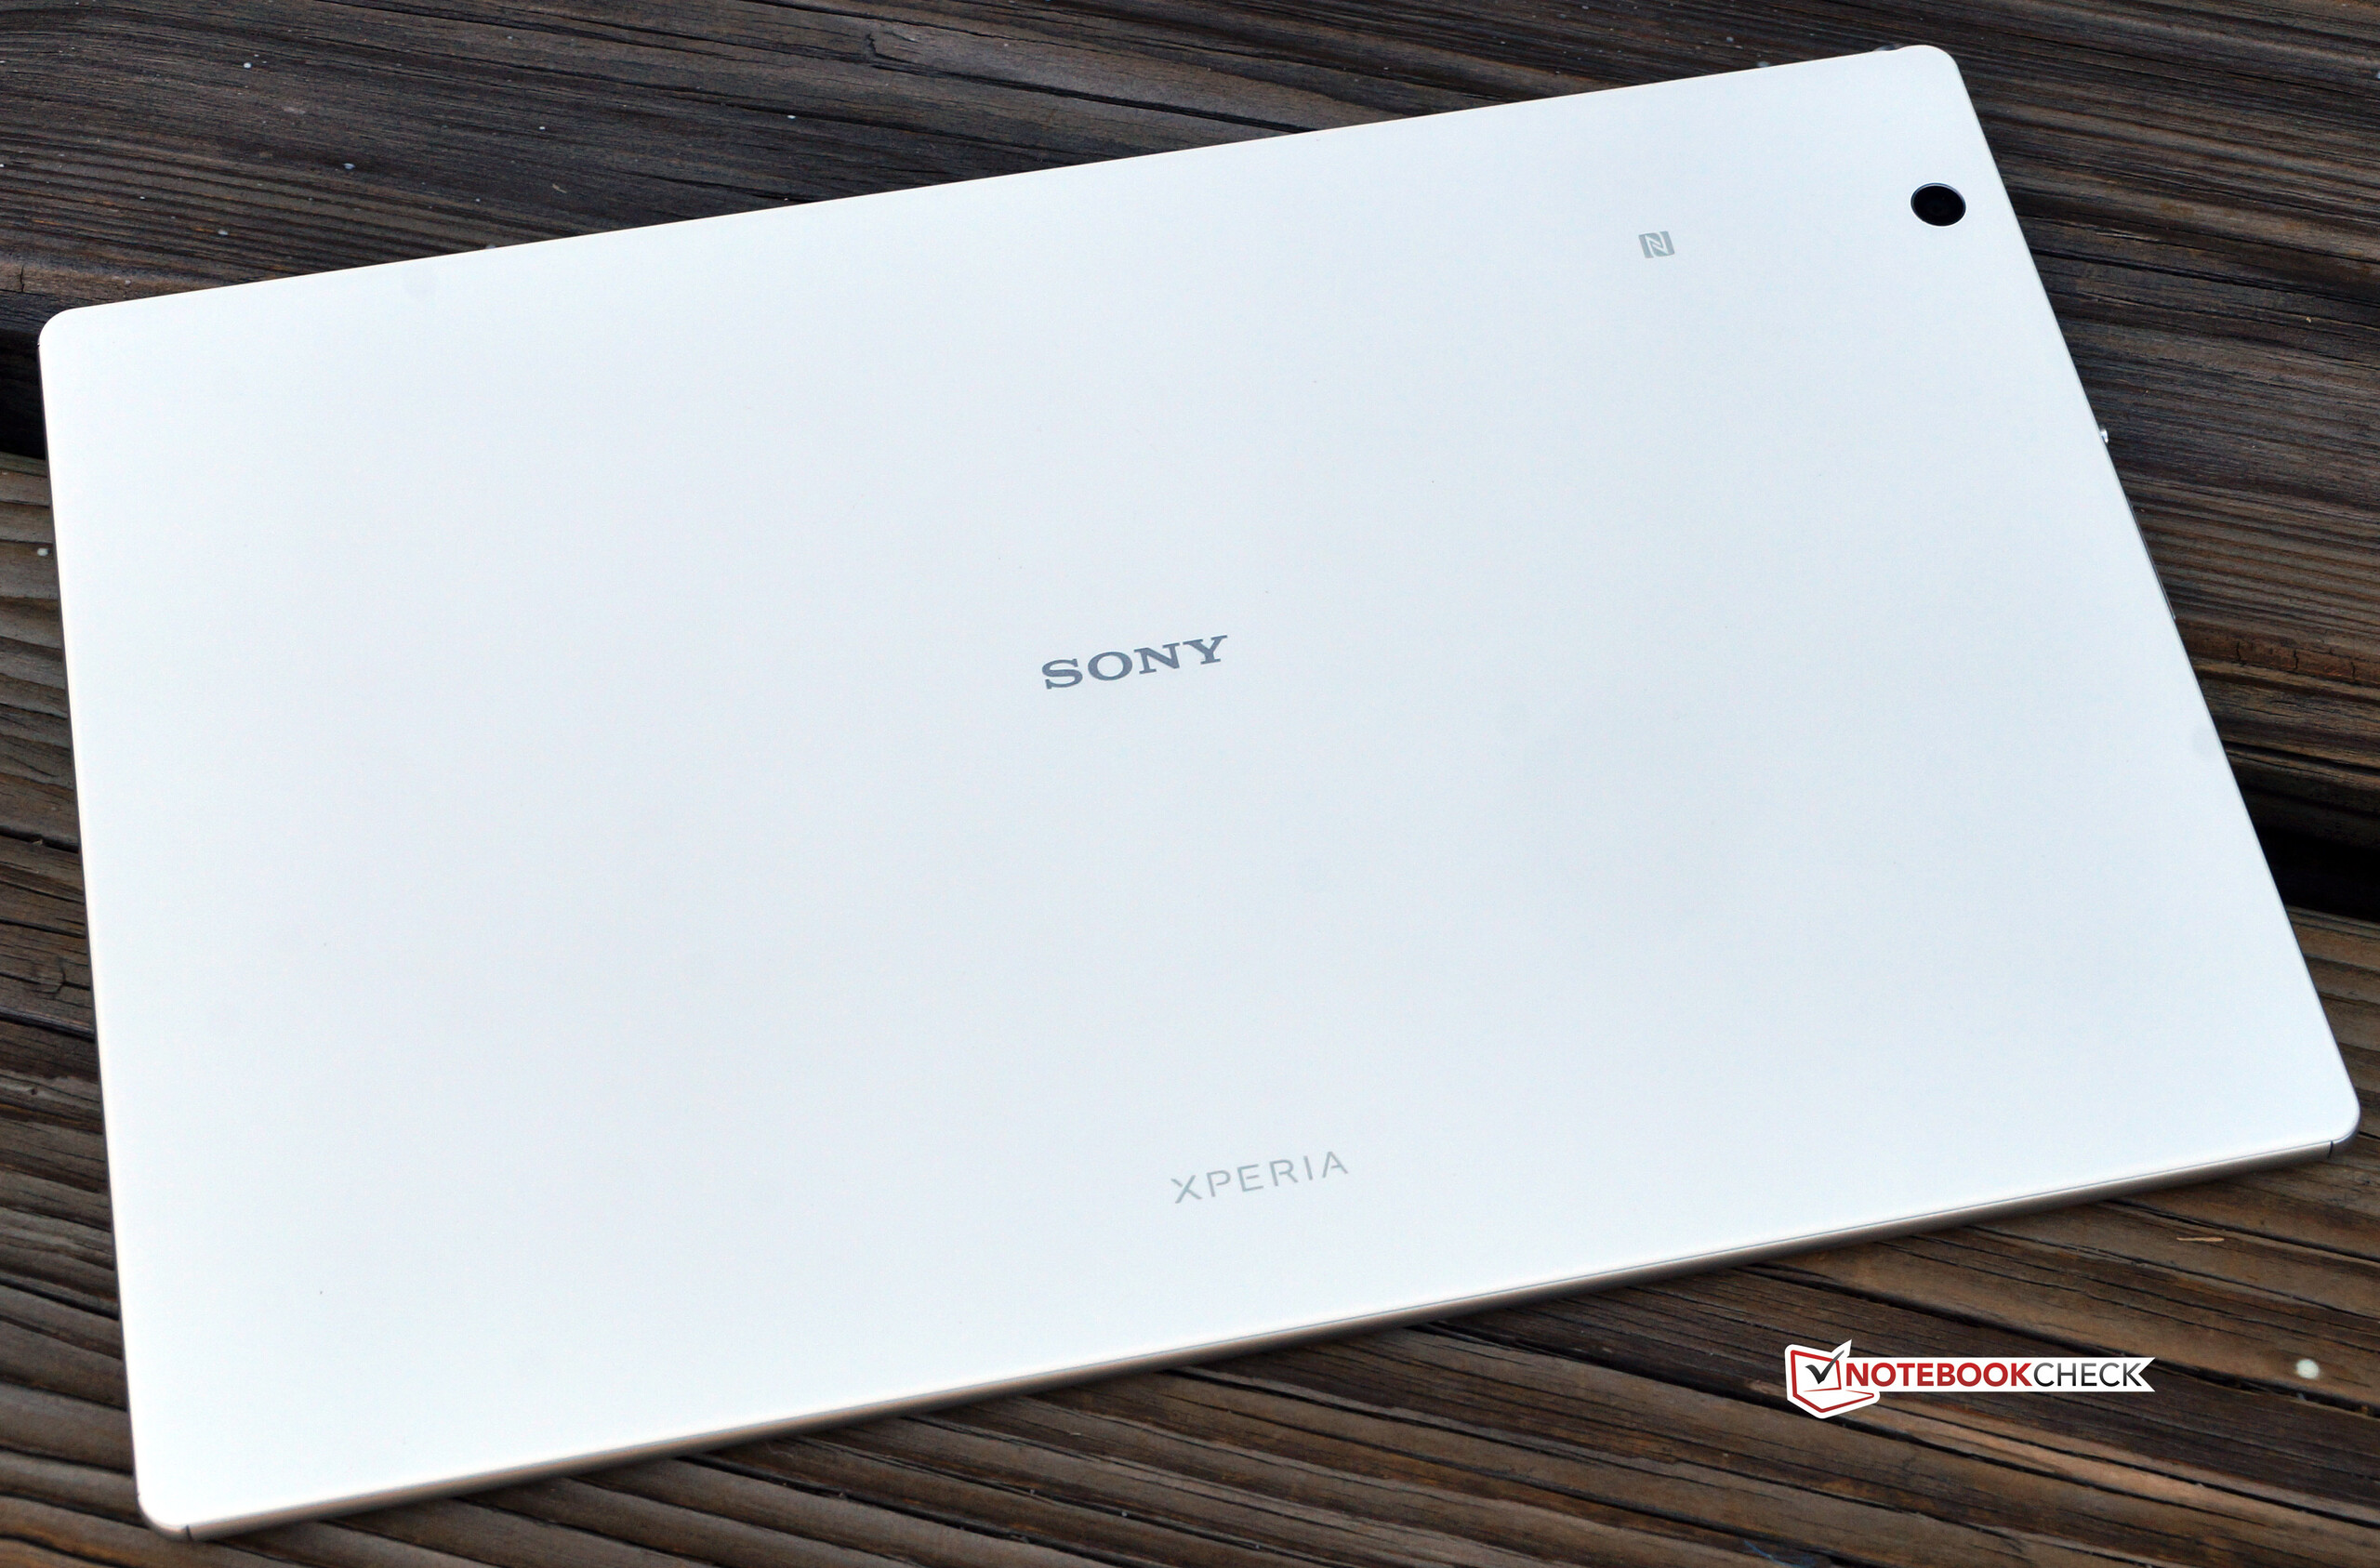 Sony Xperia Z4 Tablet Review - NotebookCheck.net Reviews